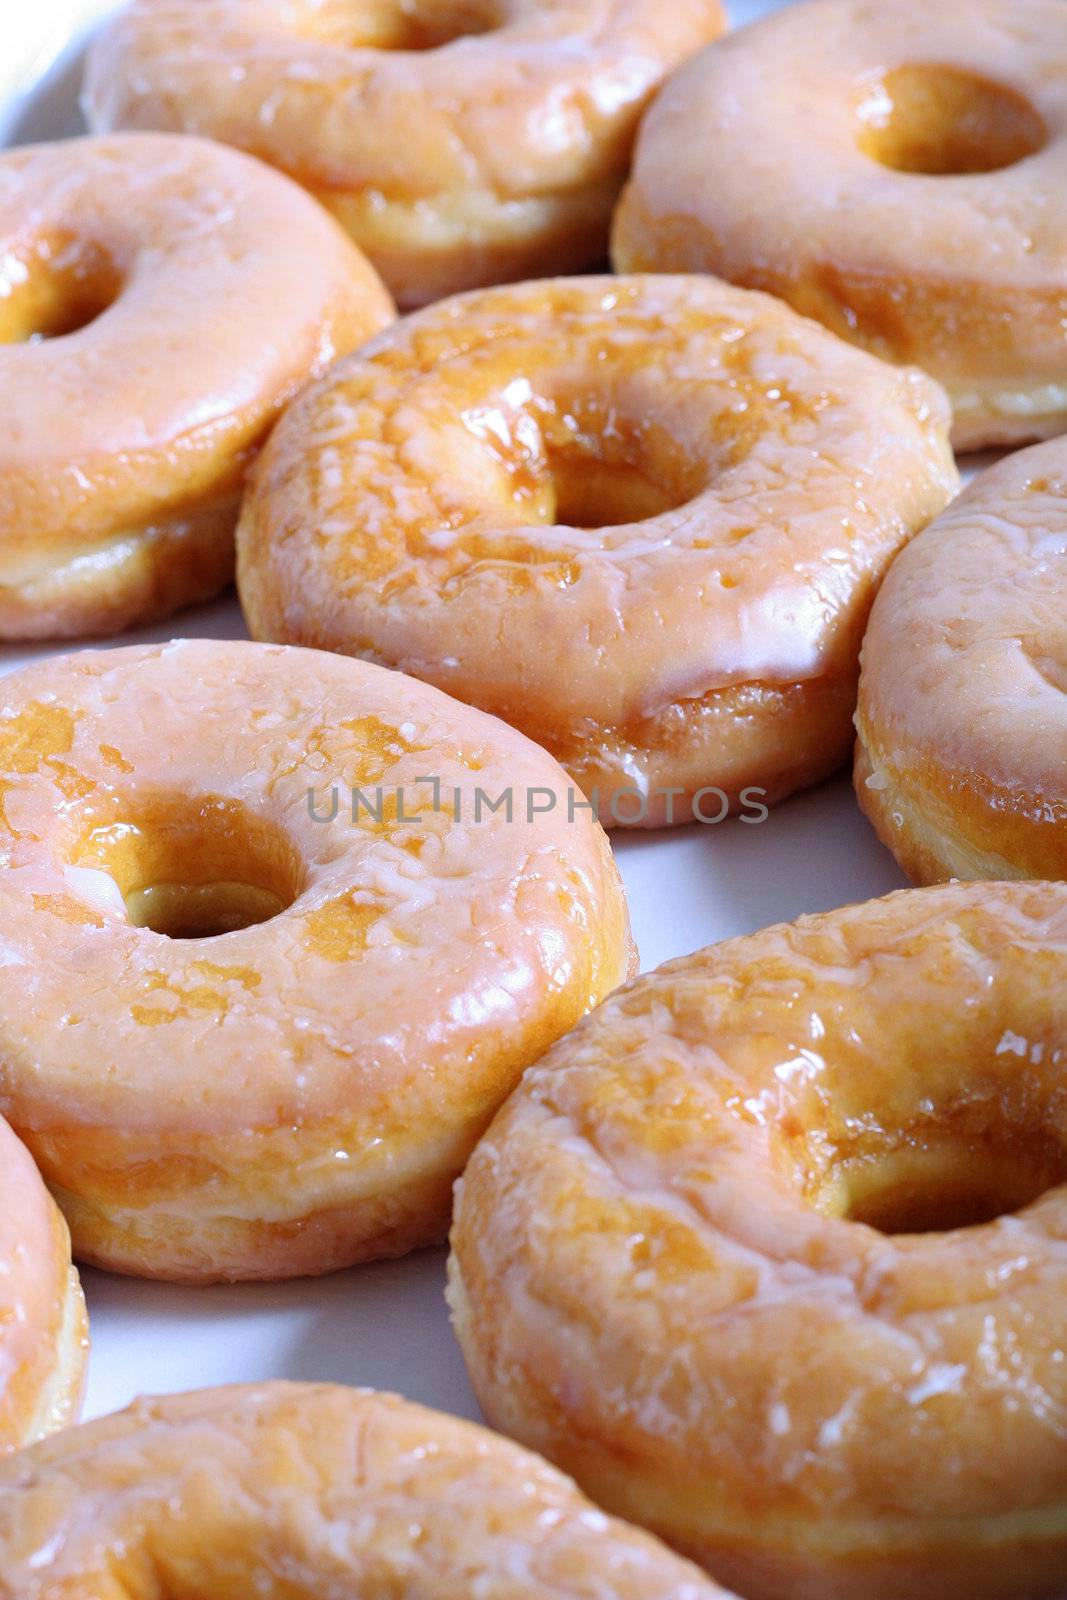 shot of glazed doughnuts vertical by creativestock